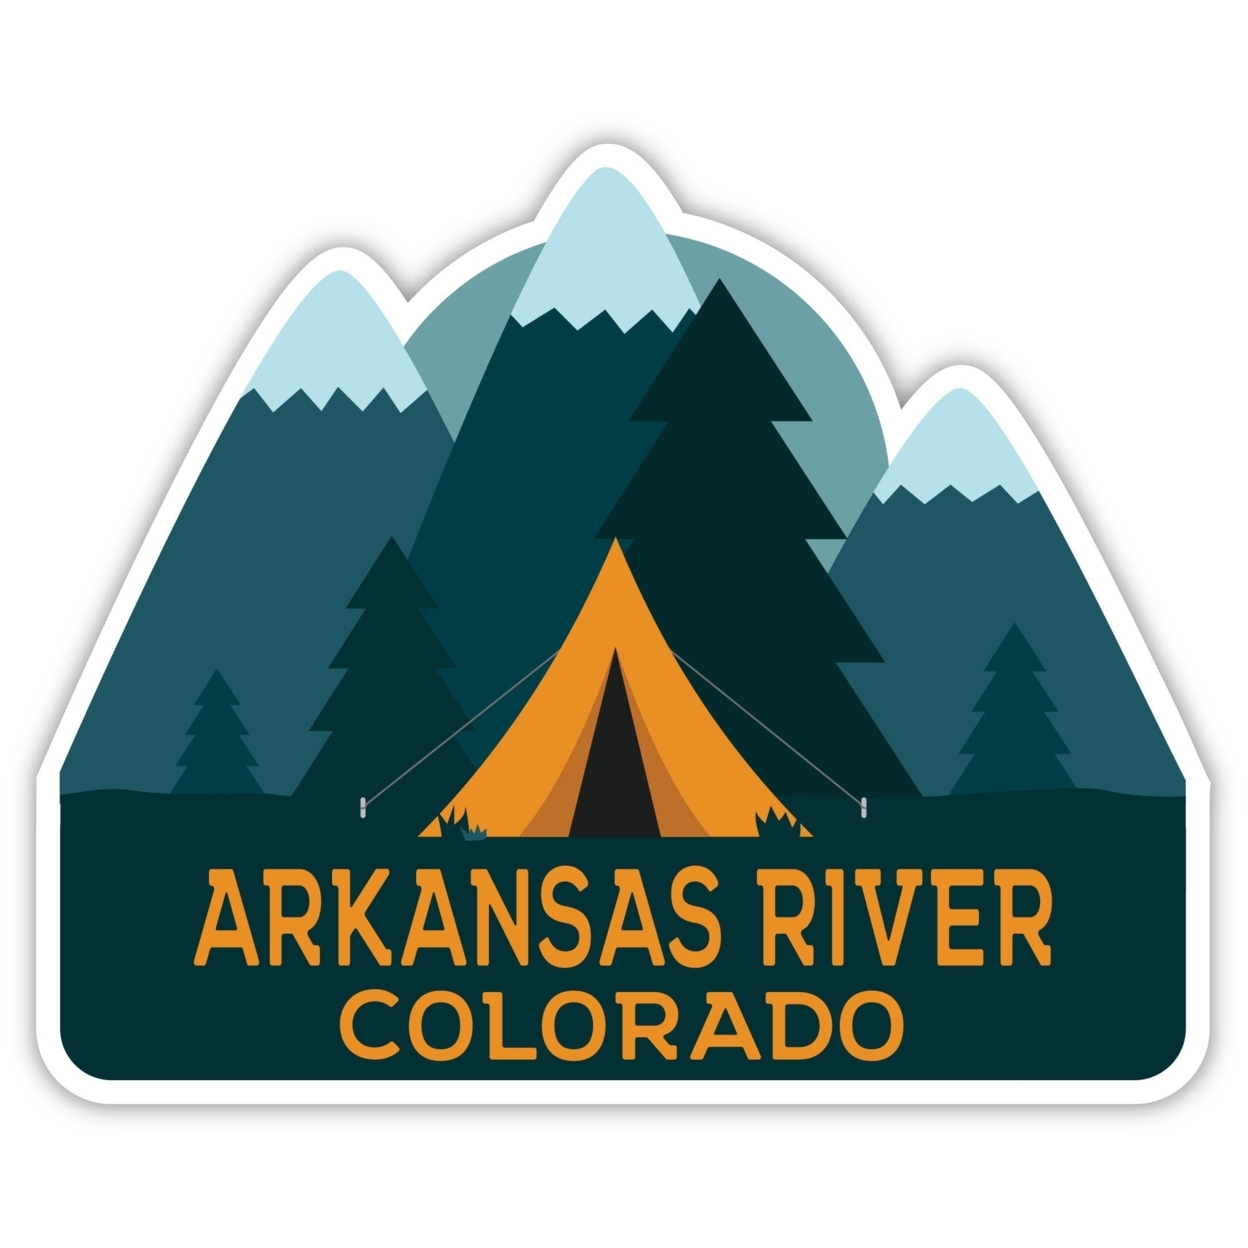 Arkansas River Colorado Souvenir Decorative Stickers (Choose Theme And Size) - 4-Pack, 8-Inch, Tent